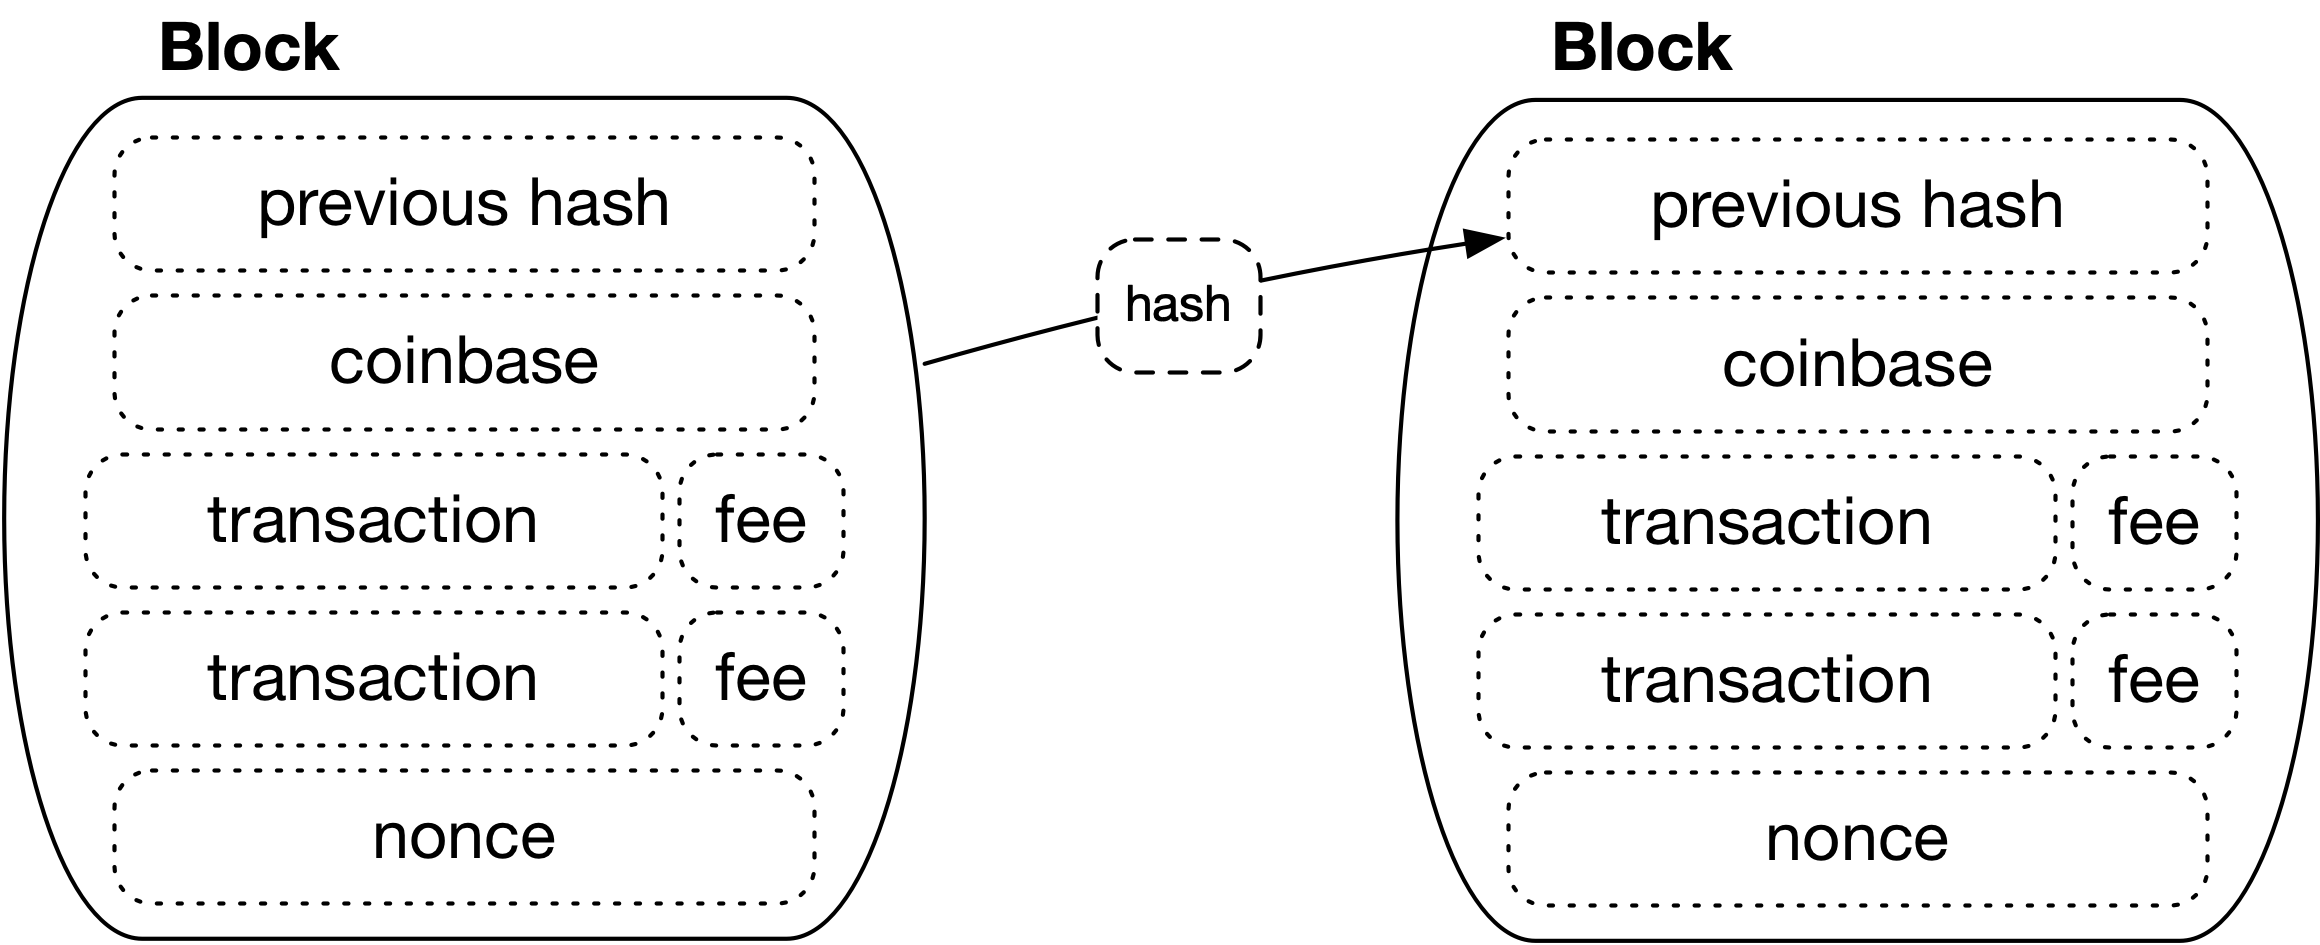 Figure 1 – Proof-of-Work-based blockchain